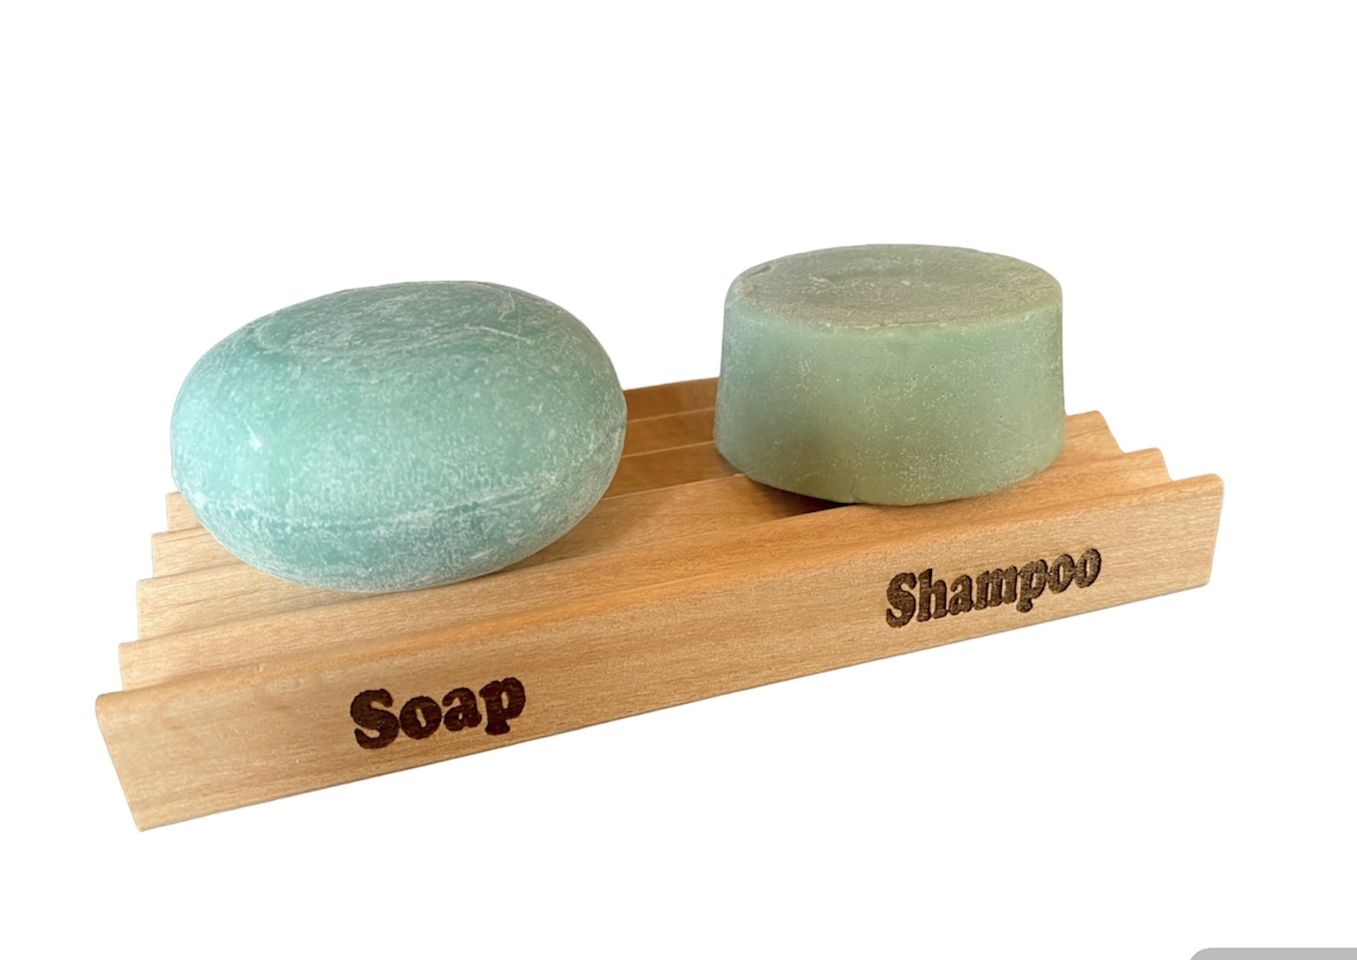 Labeled "Soap/Shampoo" Soap Dish